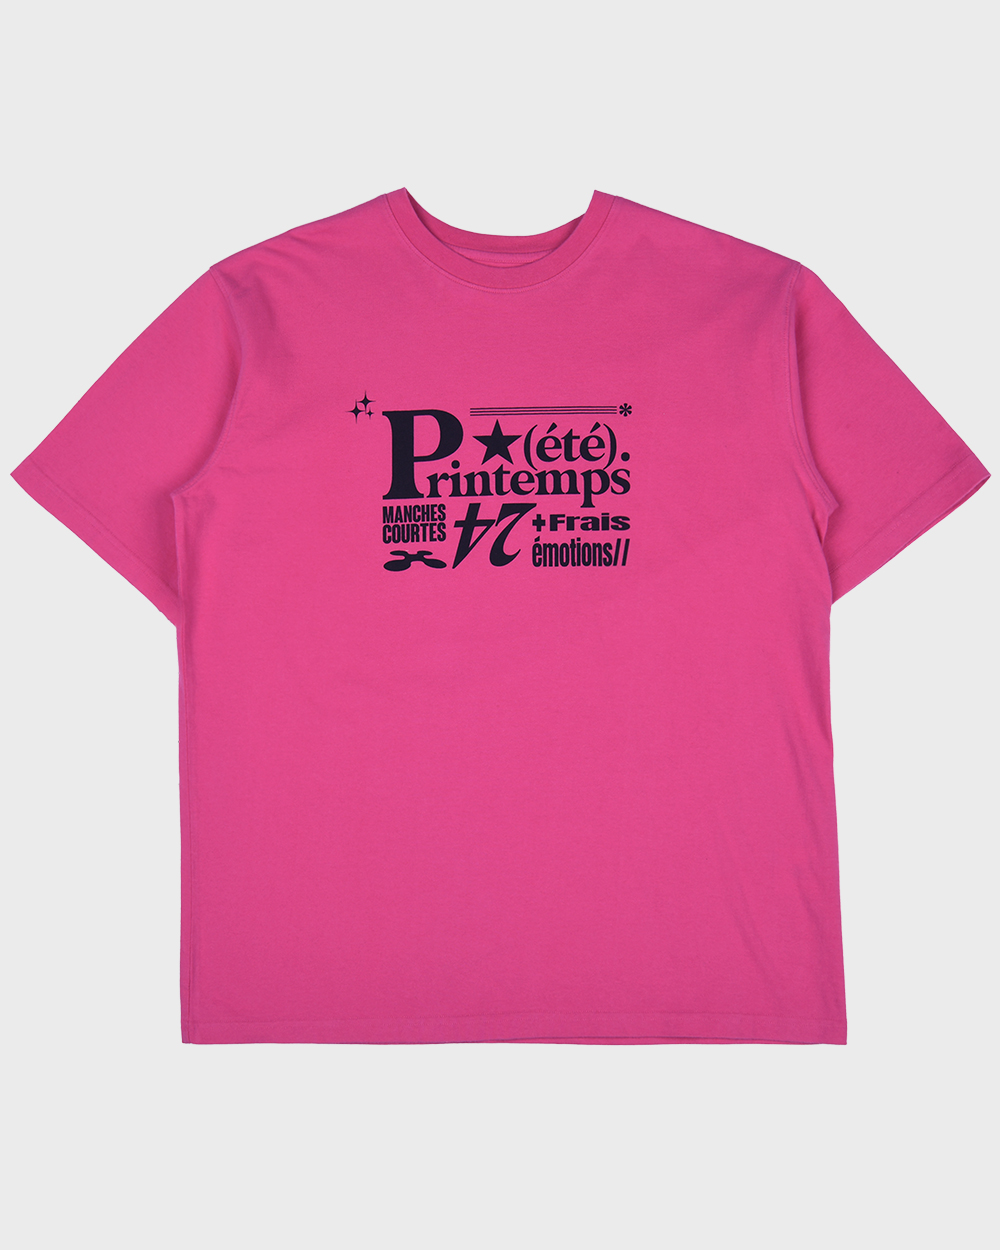 New Typo T-Shirts (Pink)